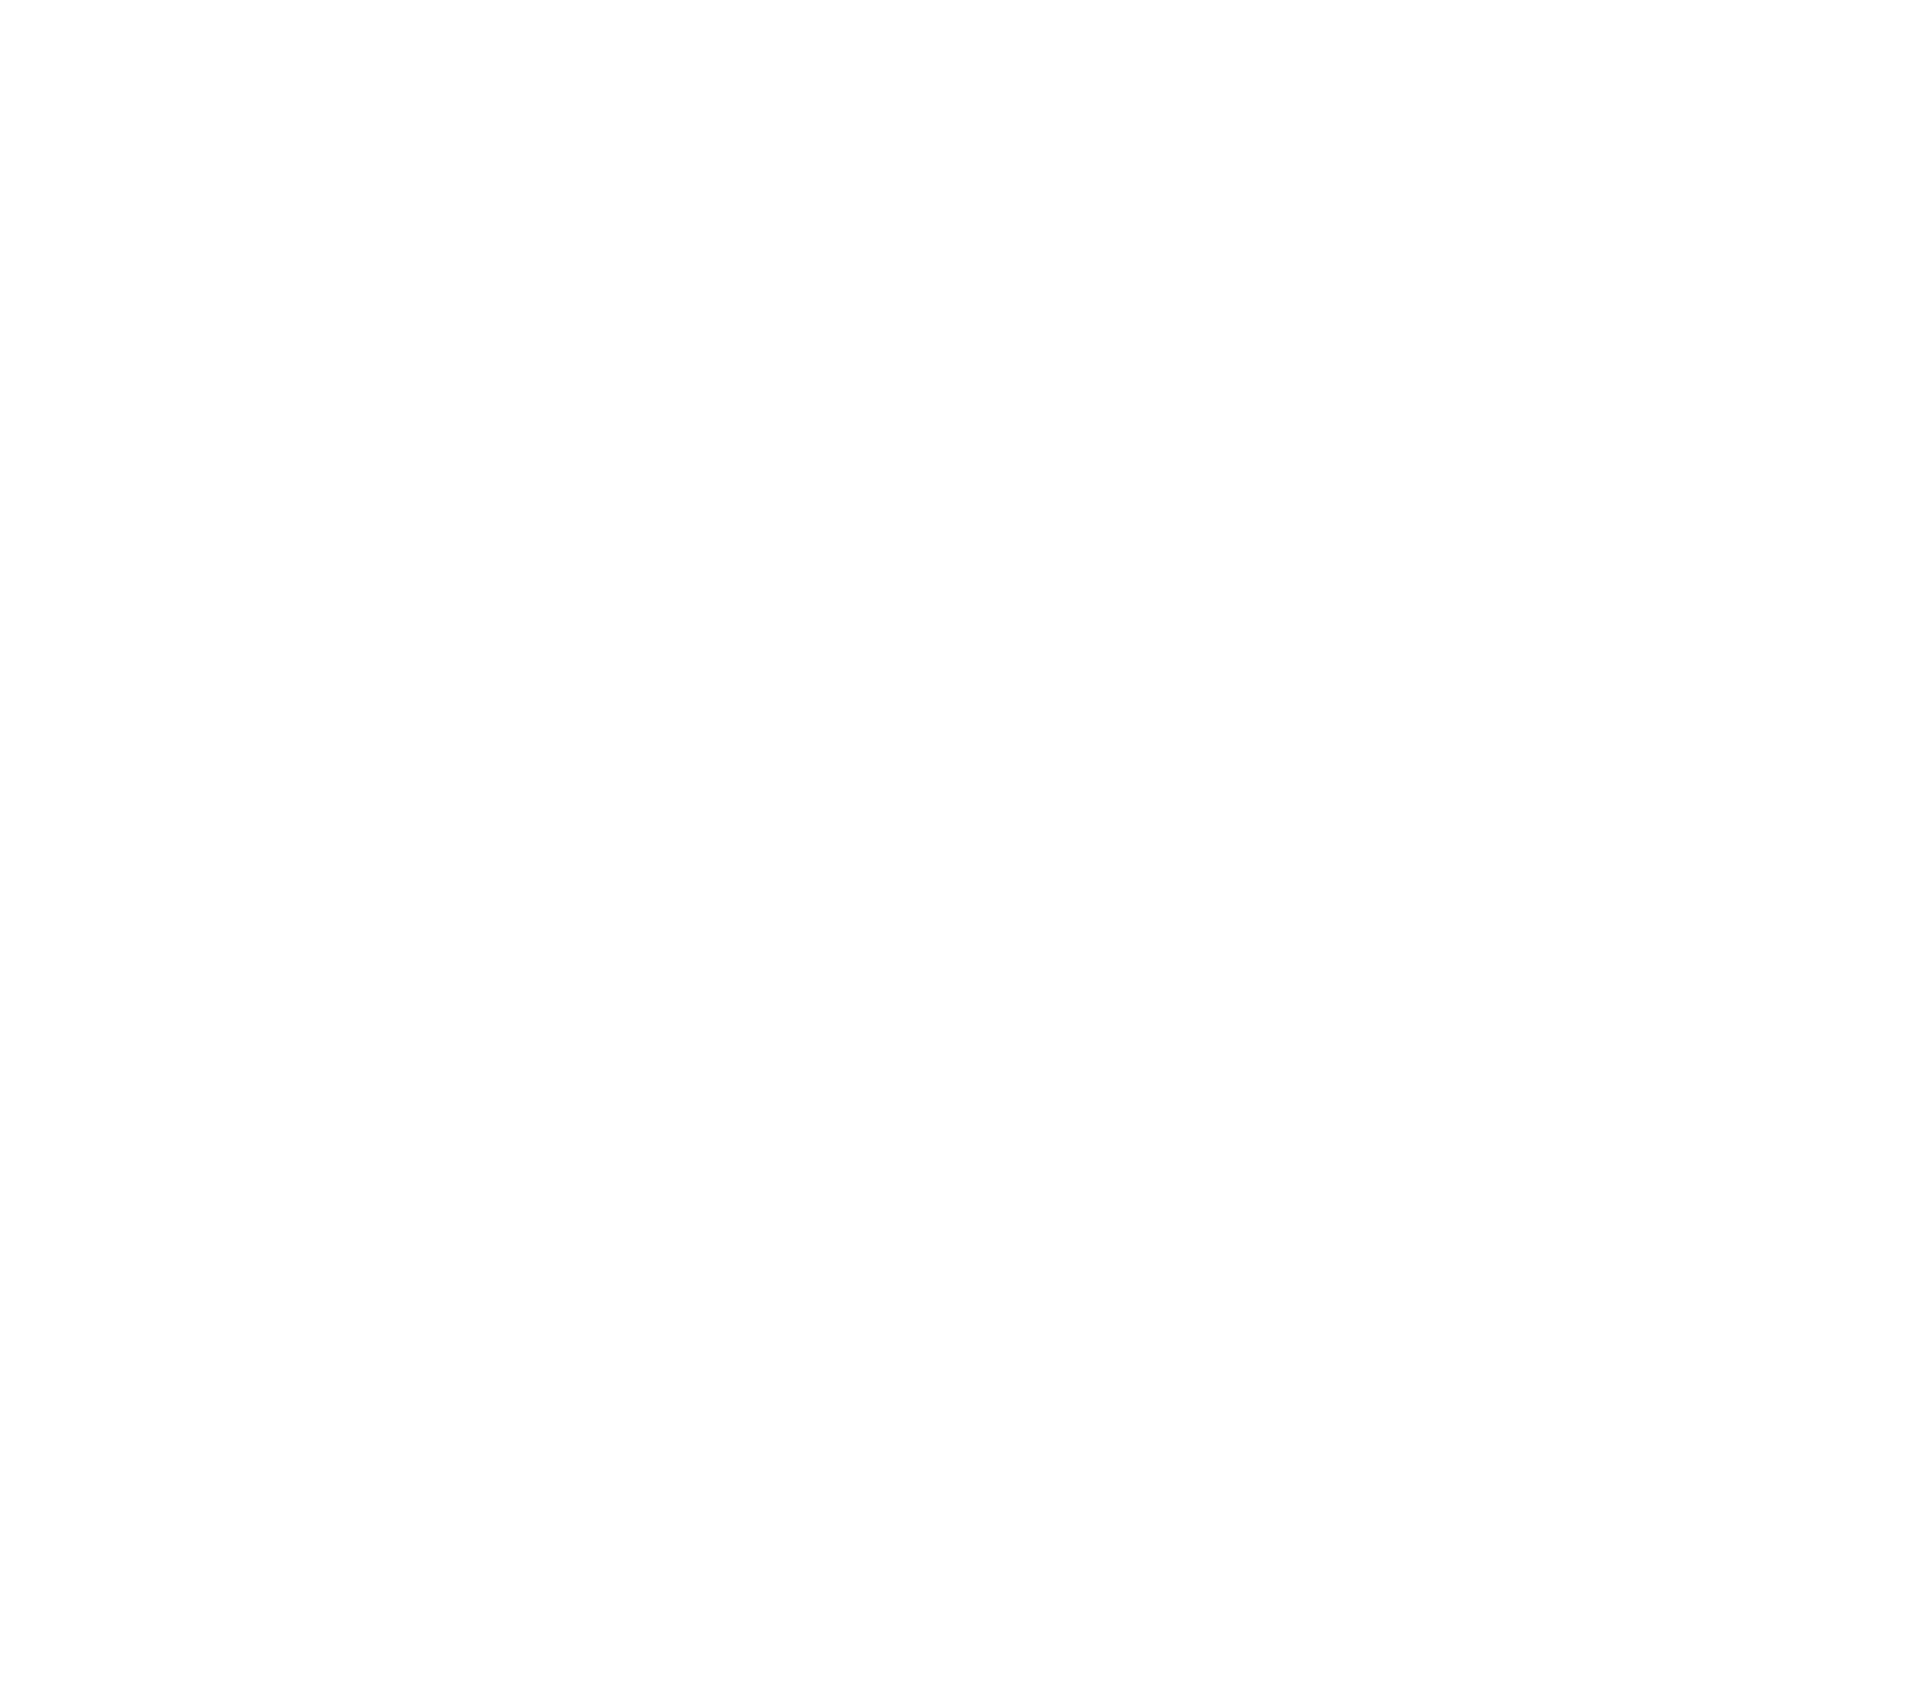 Andrespf86